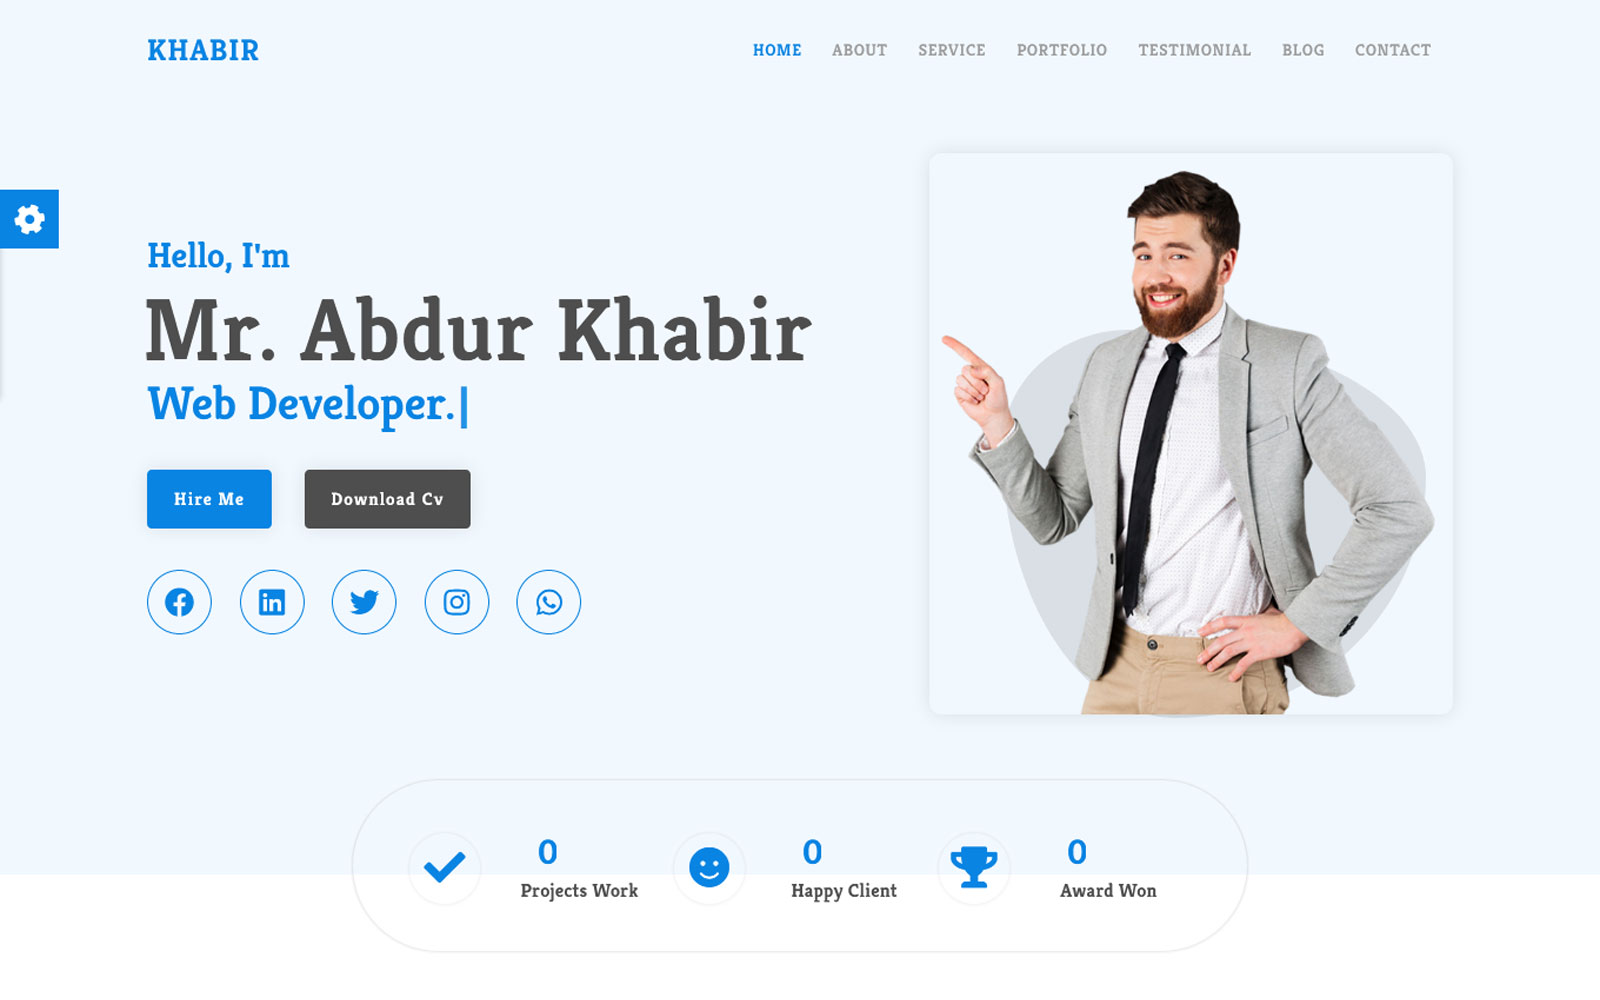 Al-Khabir - Creative Portfolio CV/Resume Landing Page Template